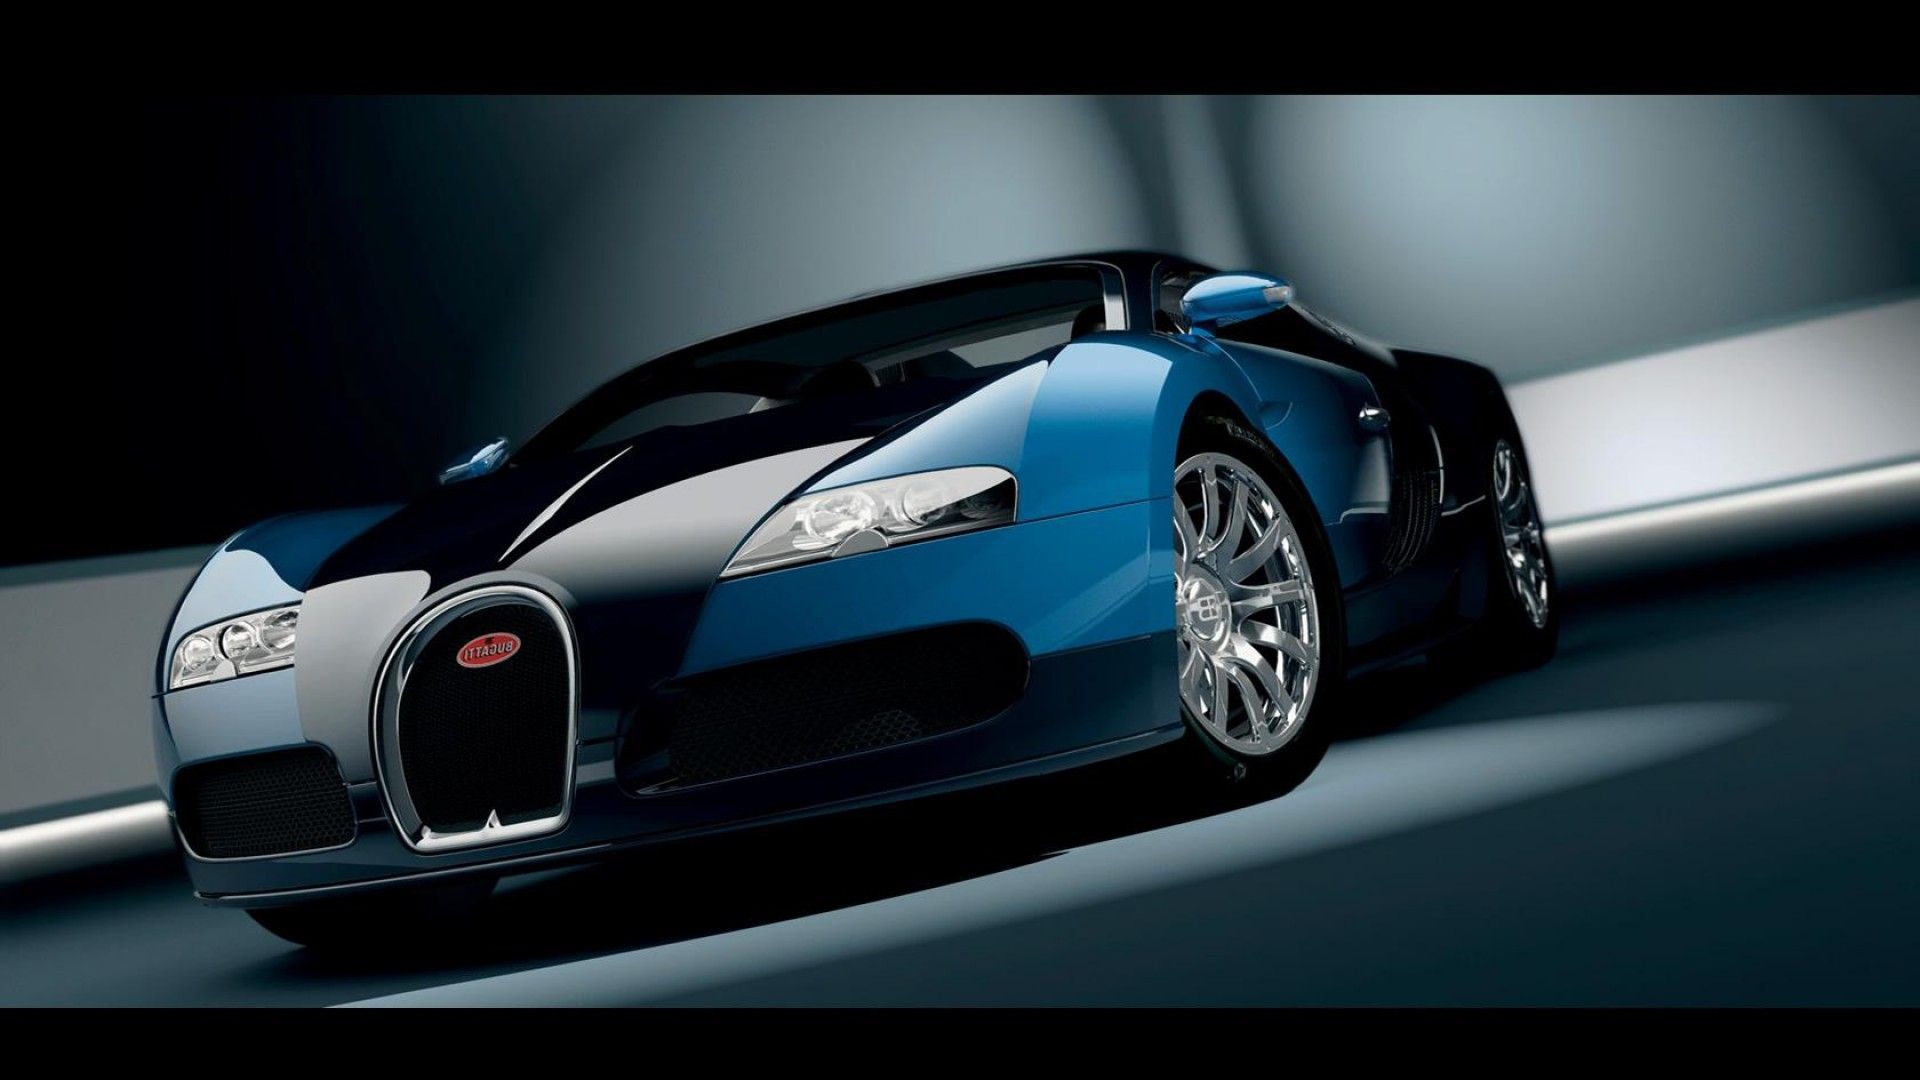 Cool Bugatti Wallpaper Background For Free Download